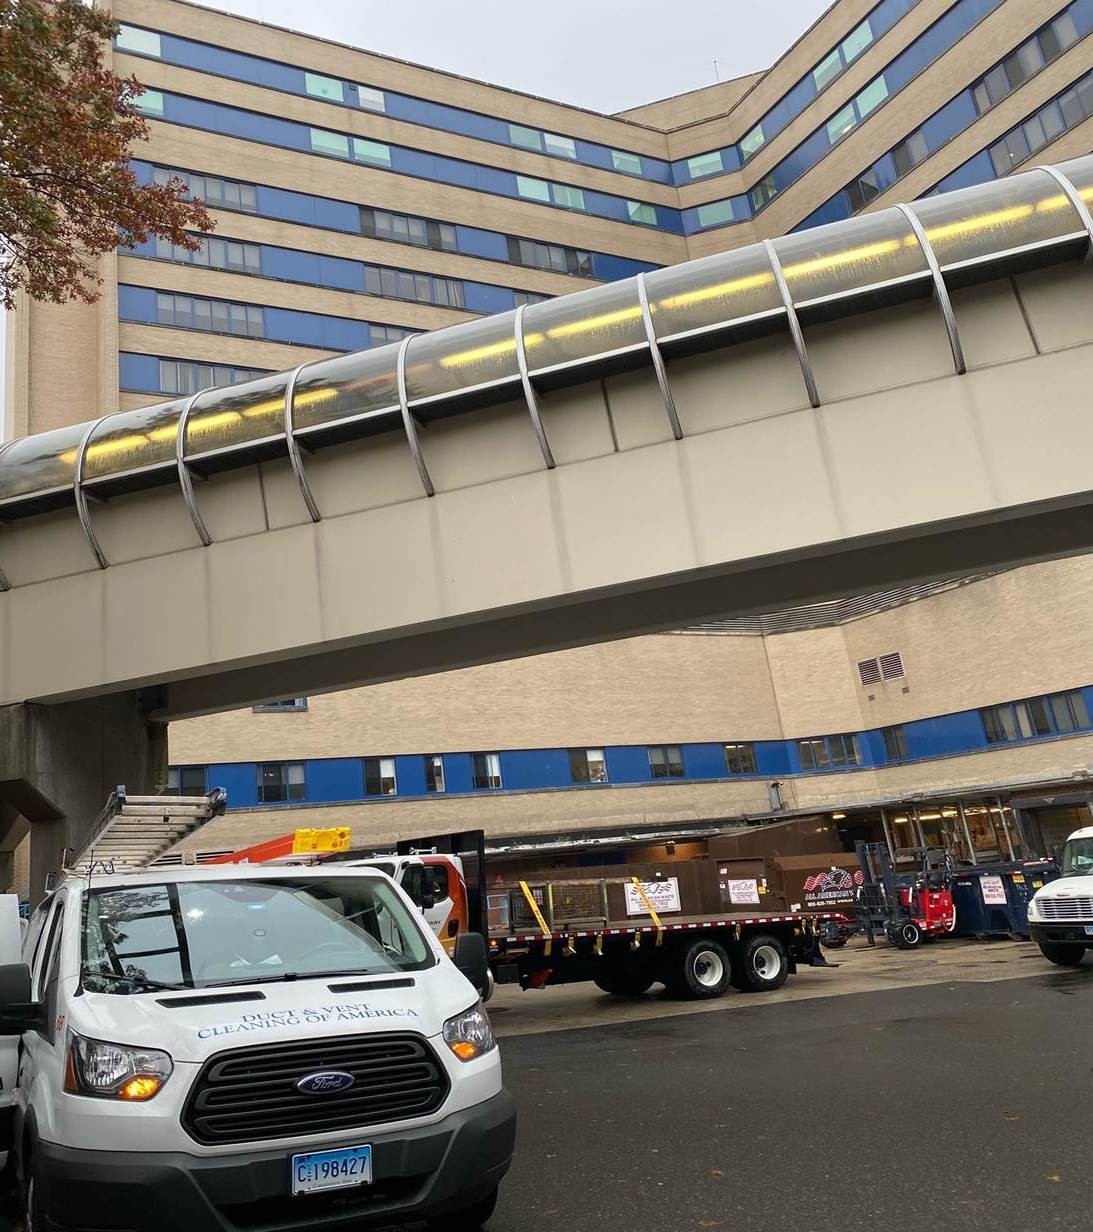 Yale New Haven Hospital Embrace Neonatal MRI Unit – New Haven, CT image001.jpg